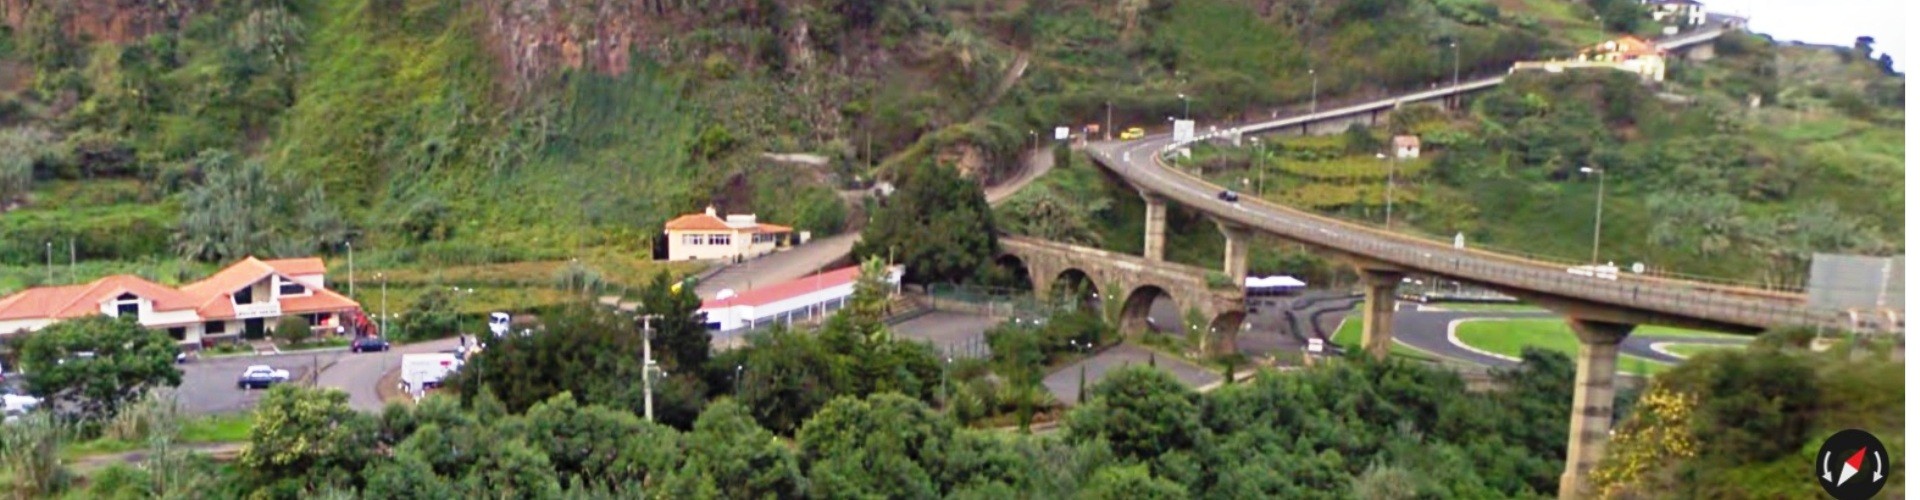 Antiga Ponte do Faial old Bridge, Santana, Madeira